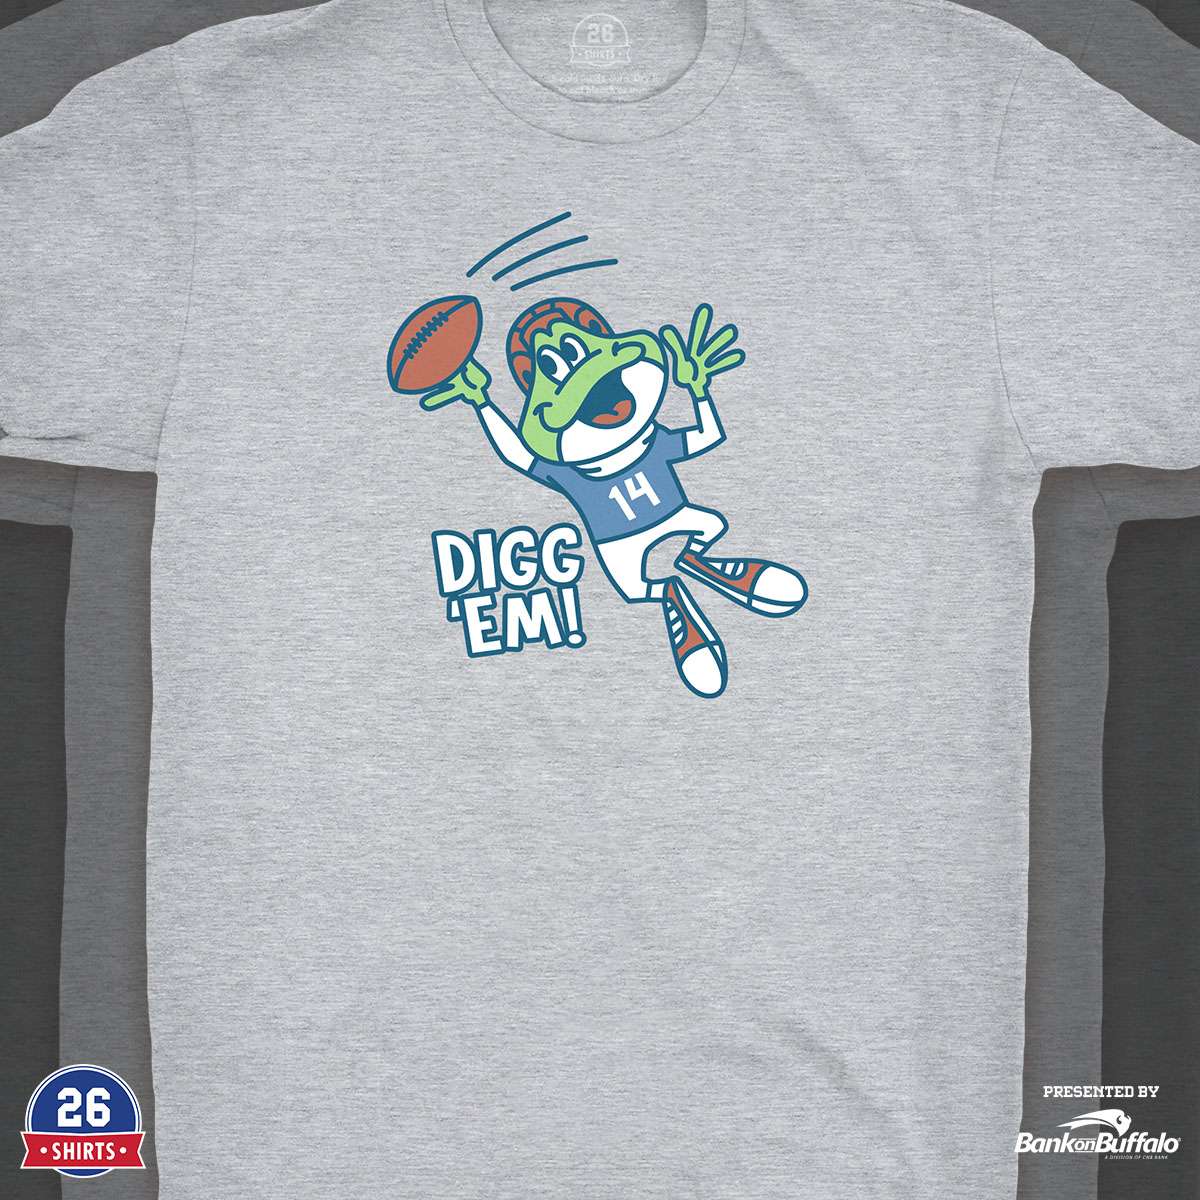 Digg em! - Frog football player, love playing football